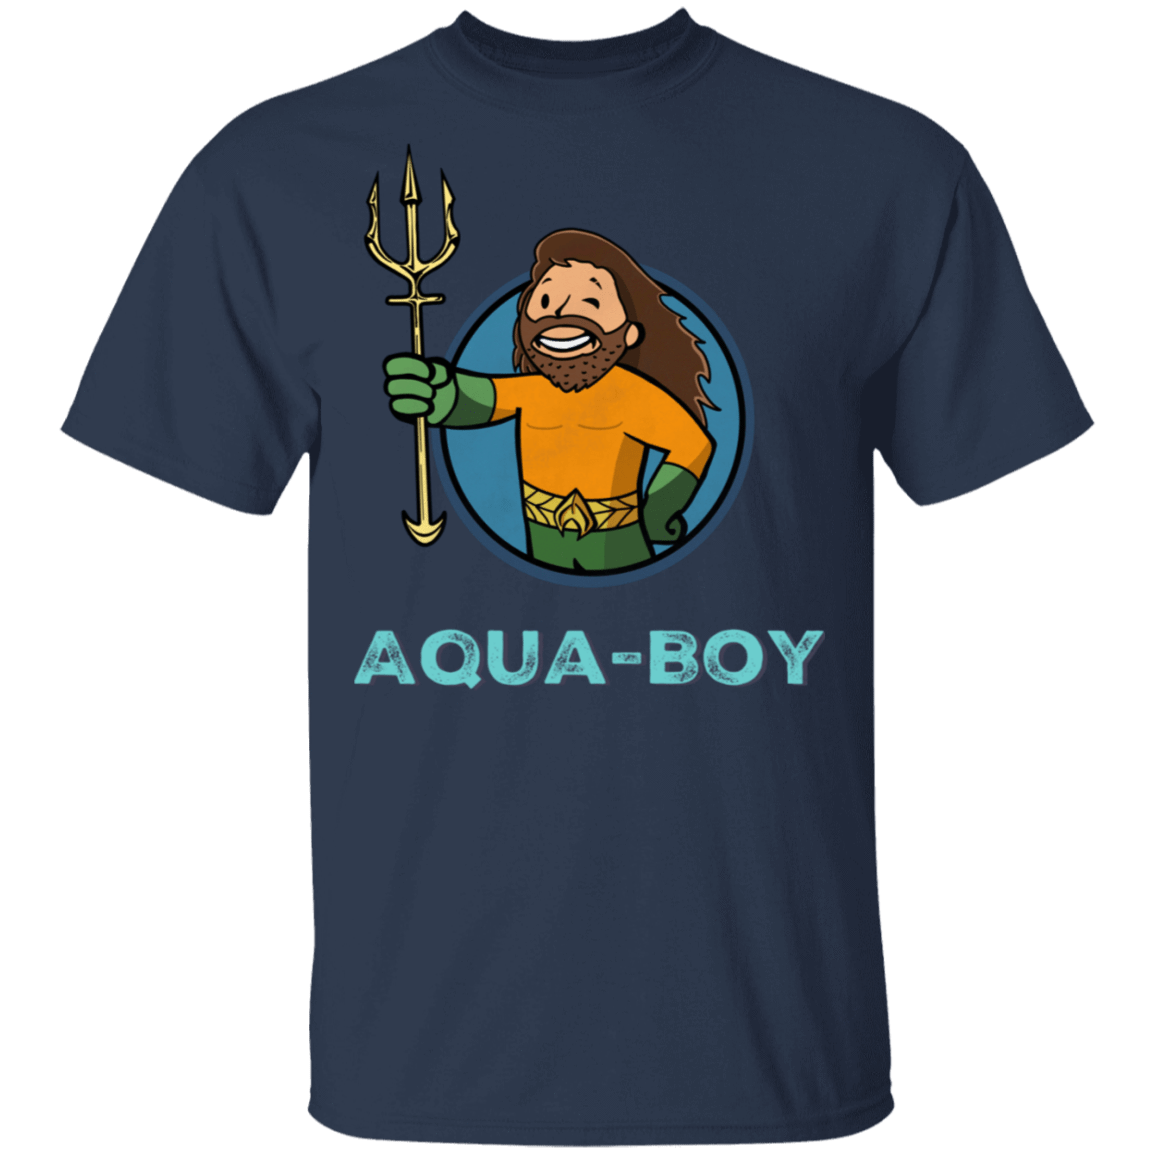 T-Shirts Navy / S Aqua Boy T-Shirt